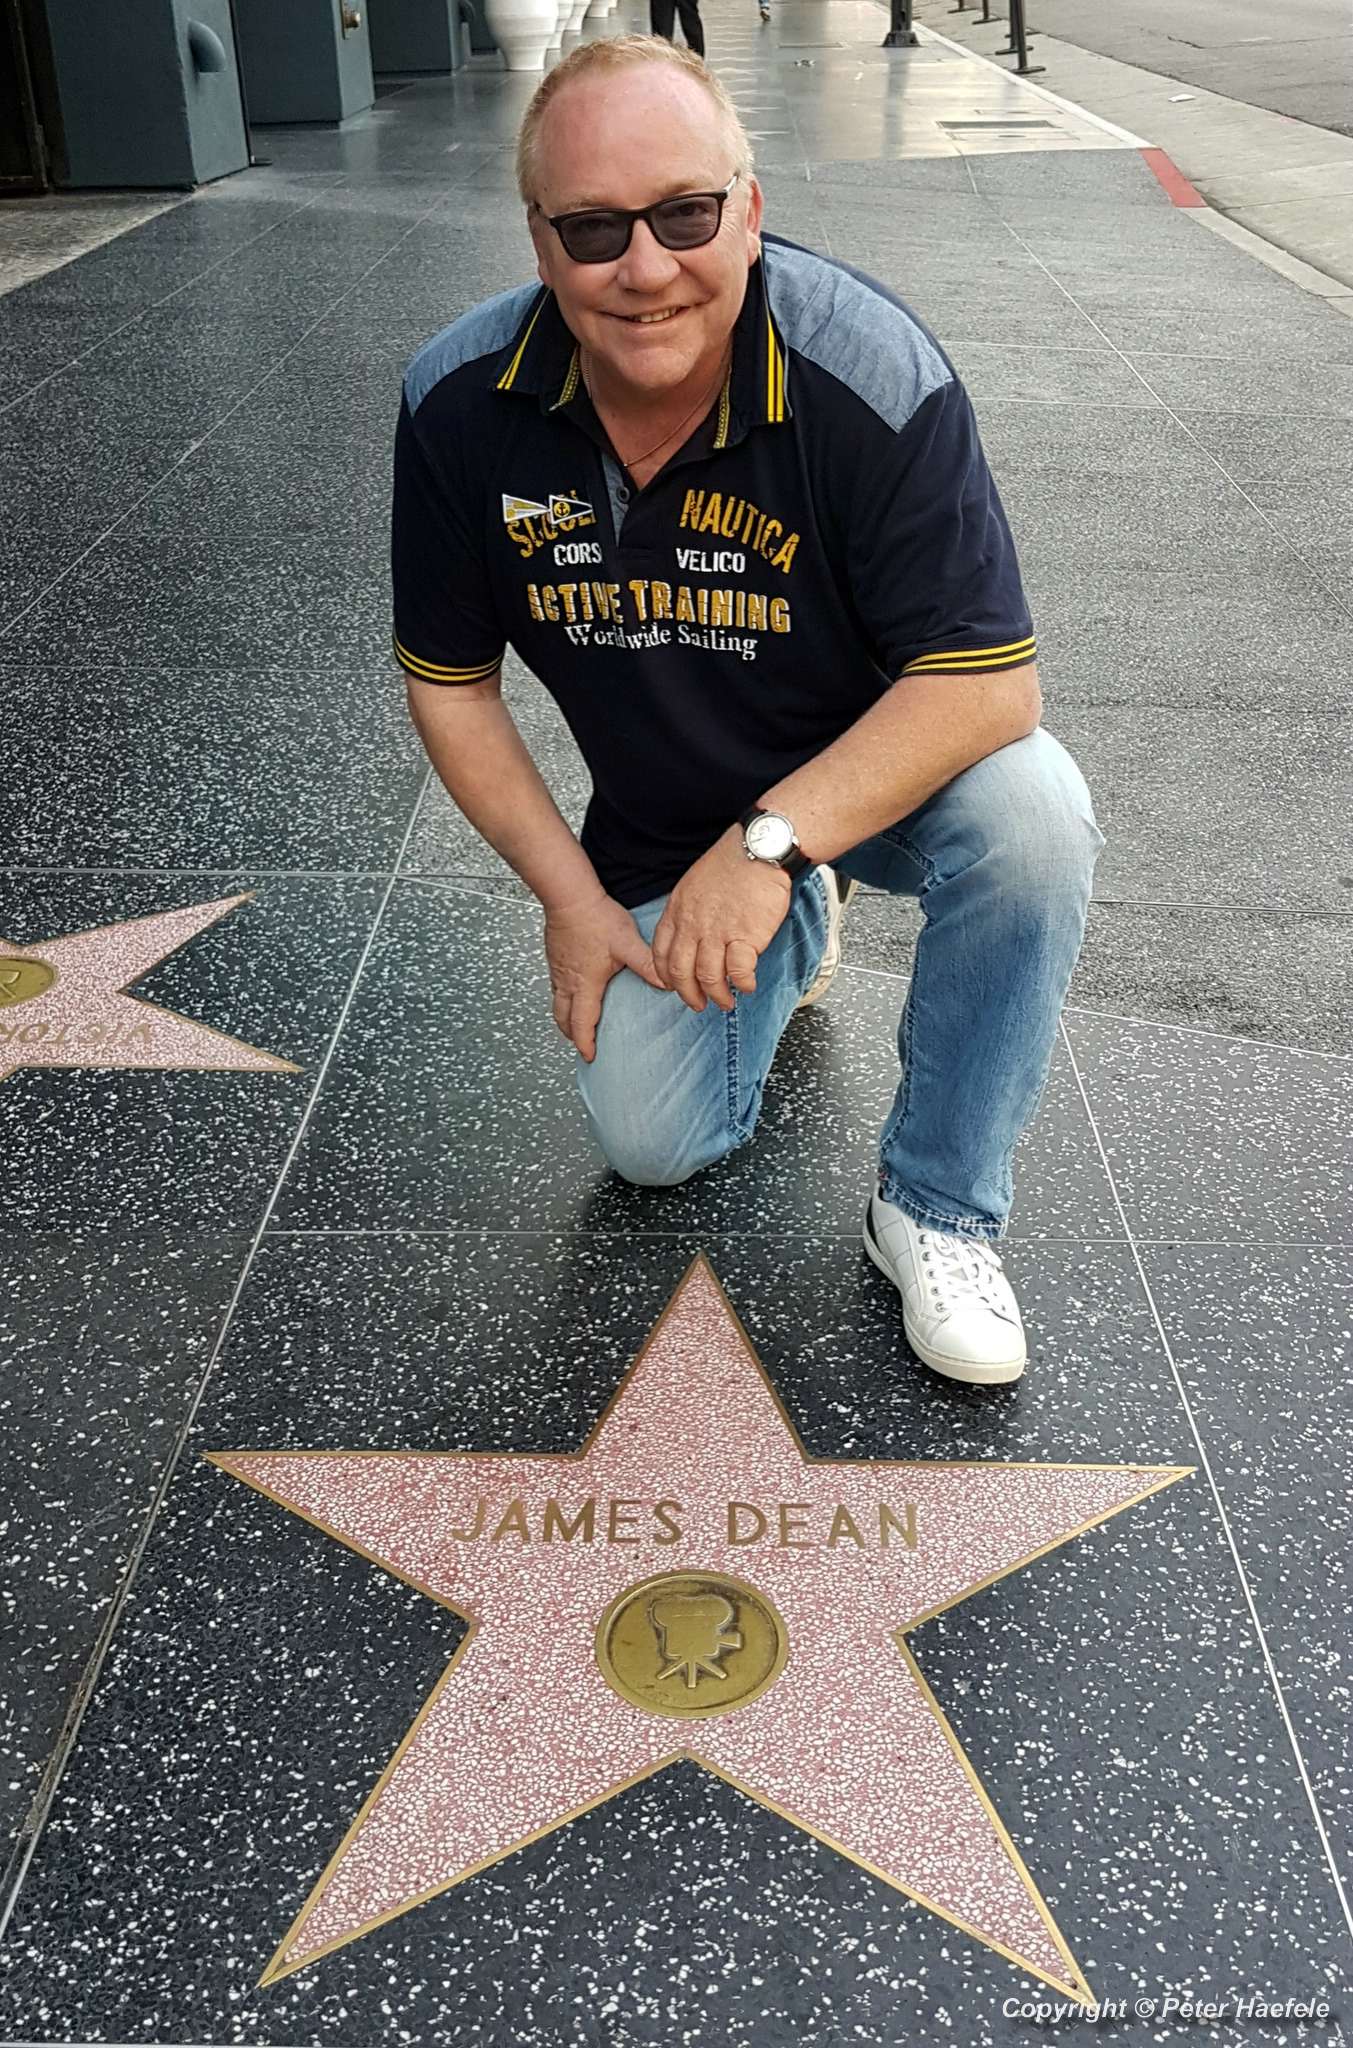 Roadtrip USA - James Dean's star on the Hollywood Walk of Fame, 1719 Vine Street, Los Angeles, California